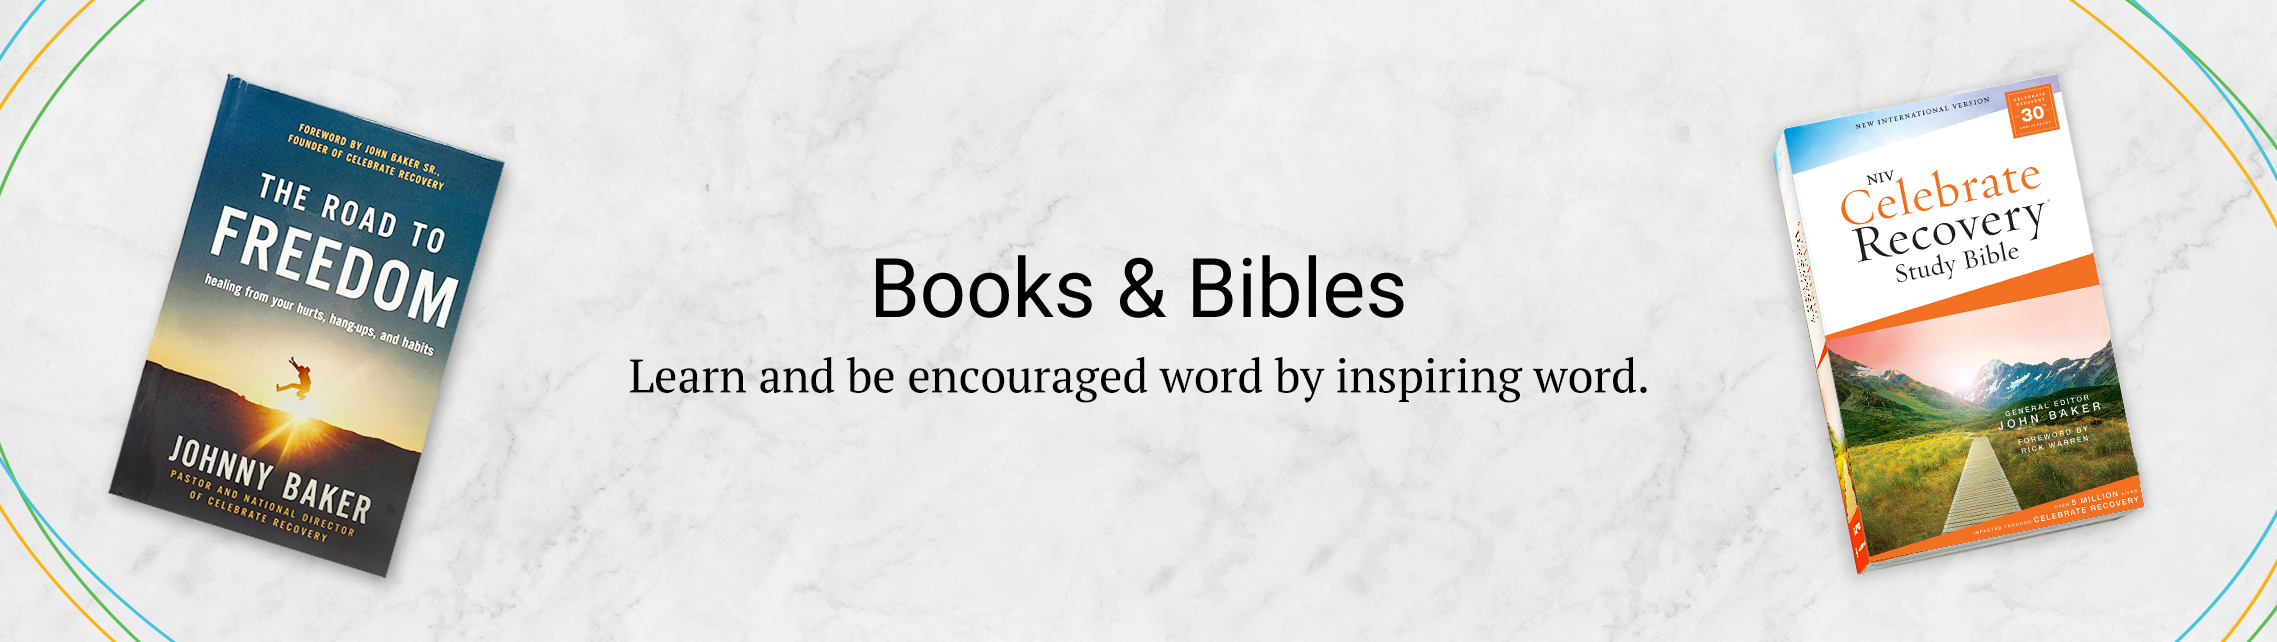 Books & Bibles